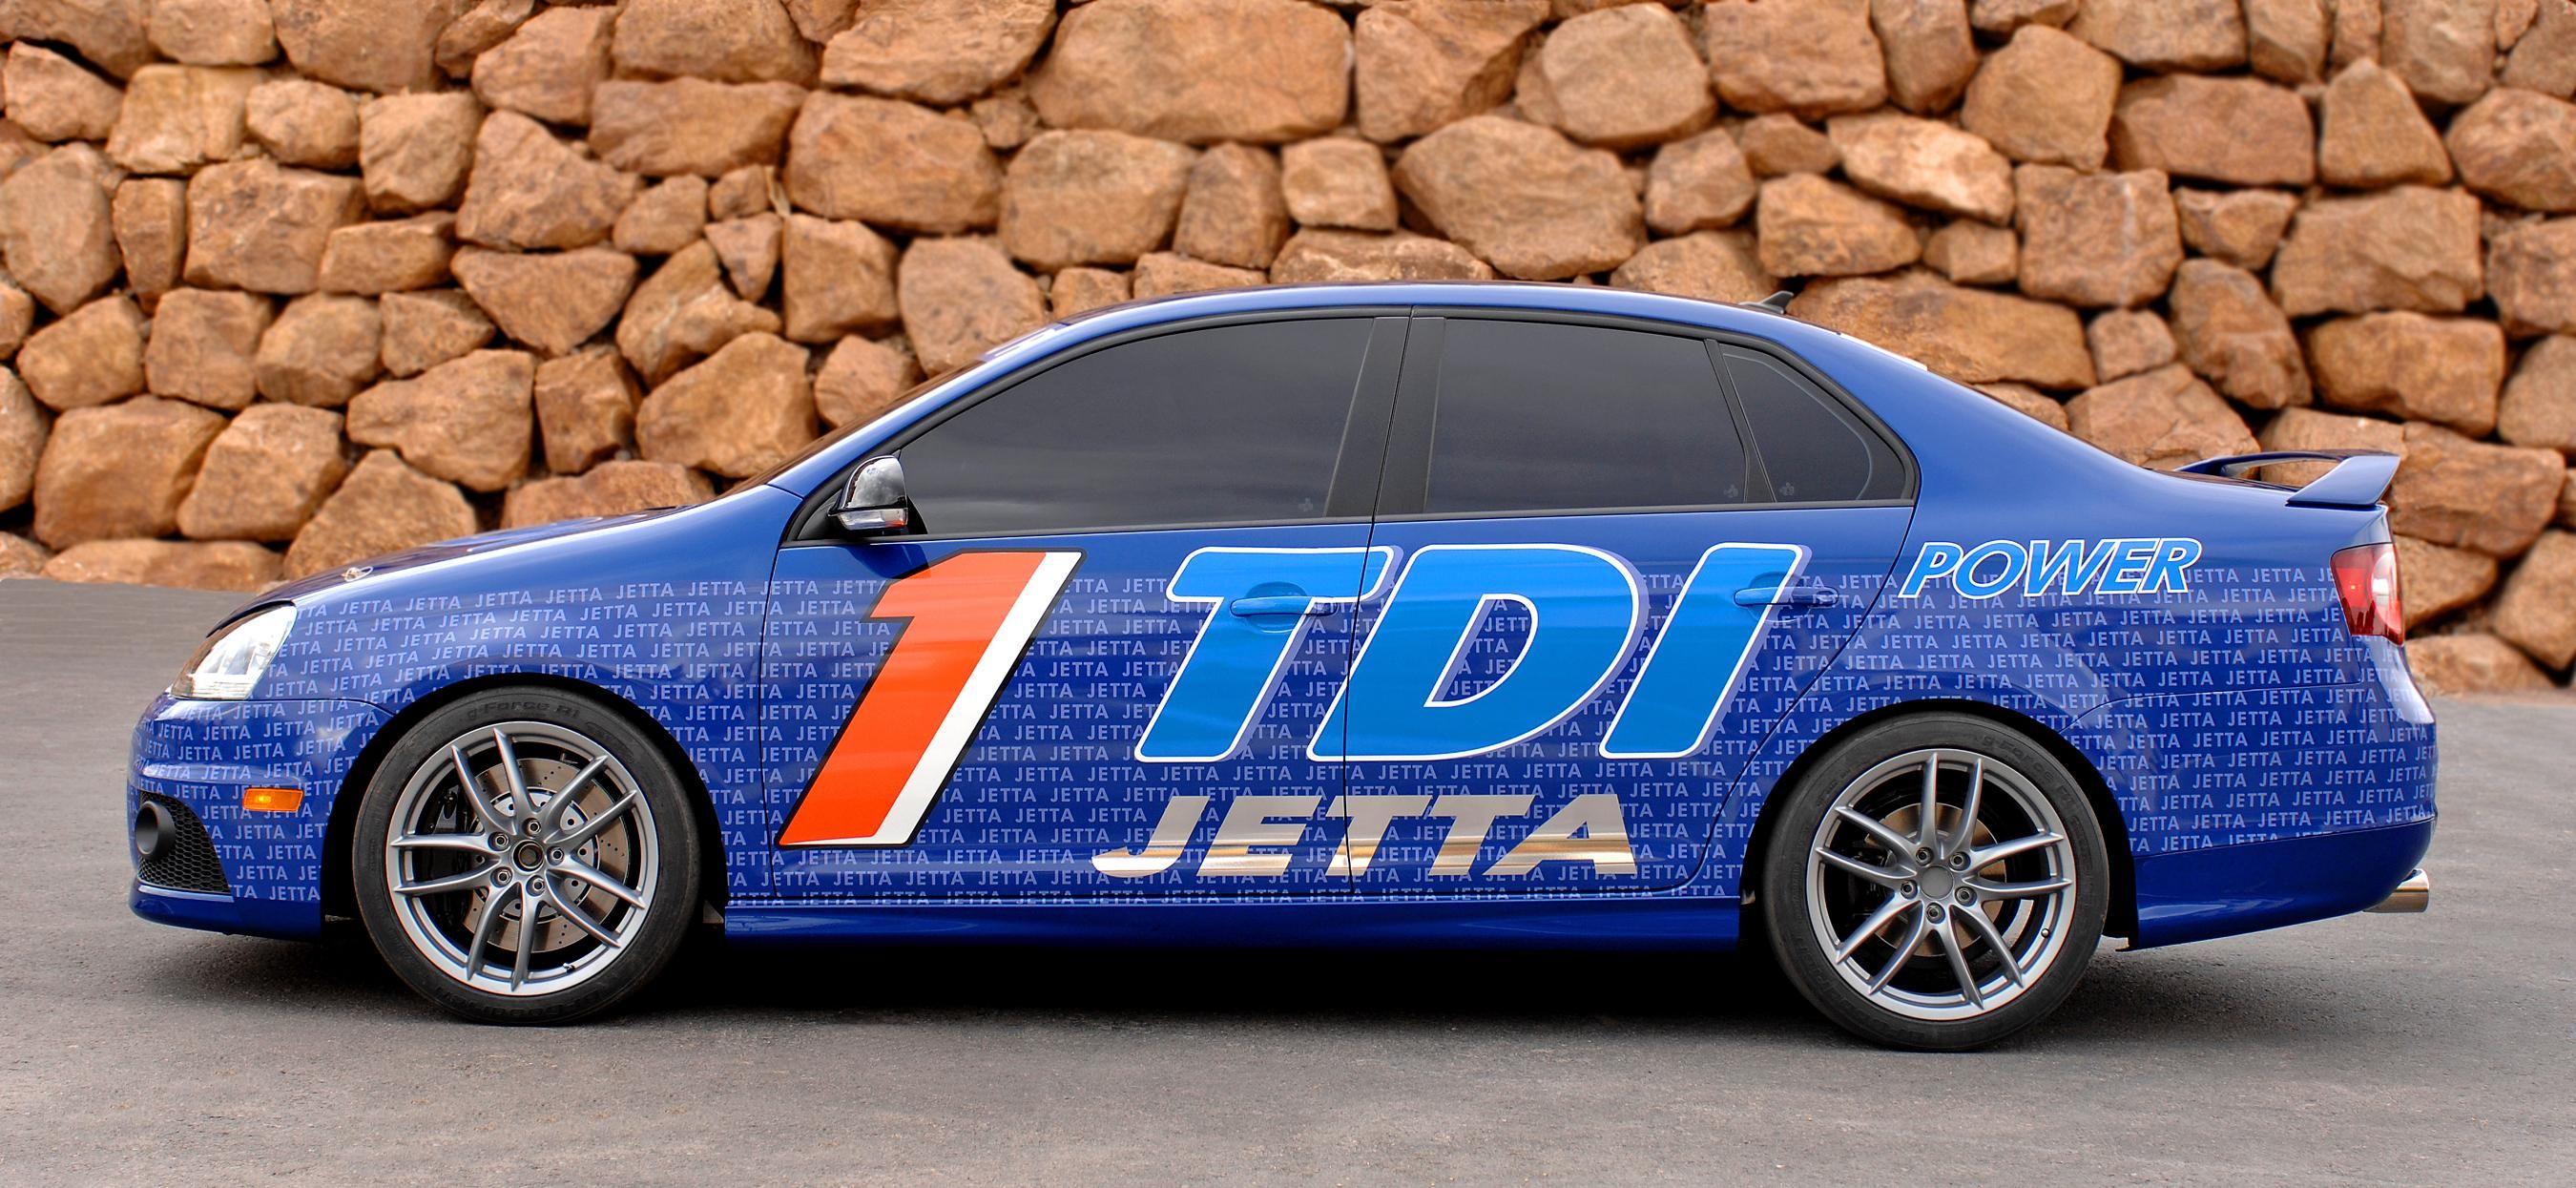 2007 Volkswagen Jetta TDI Cup